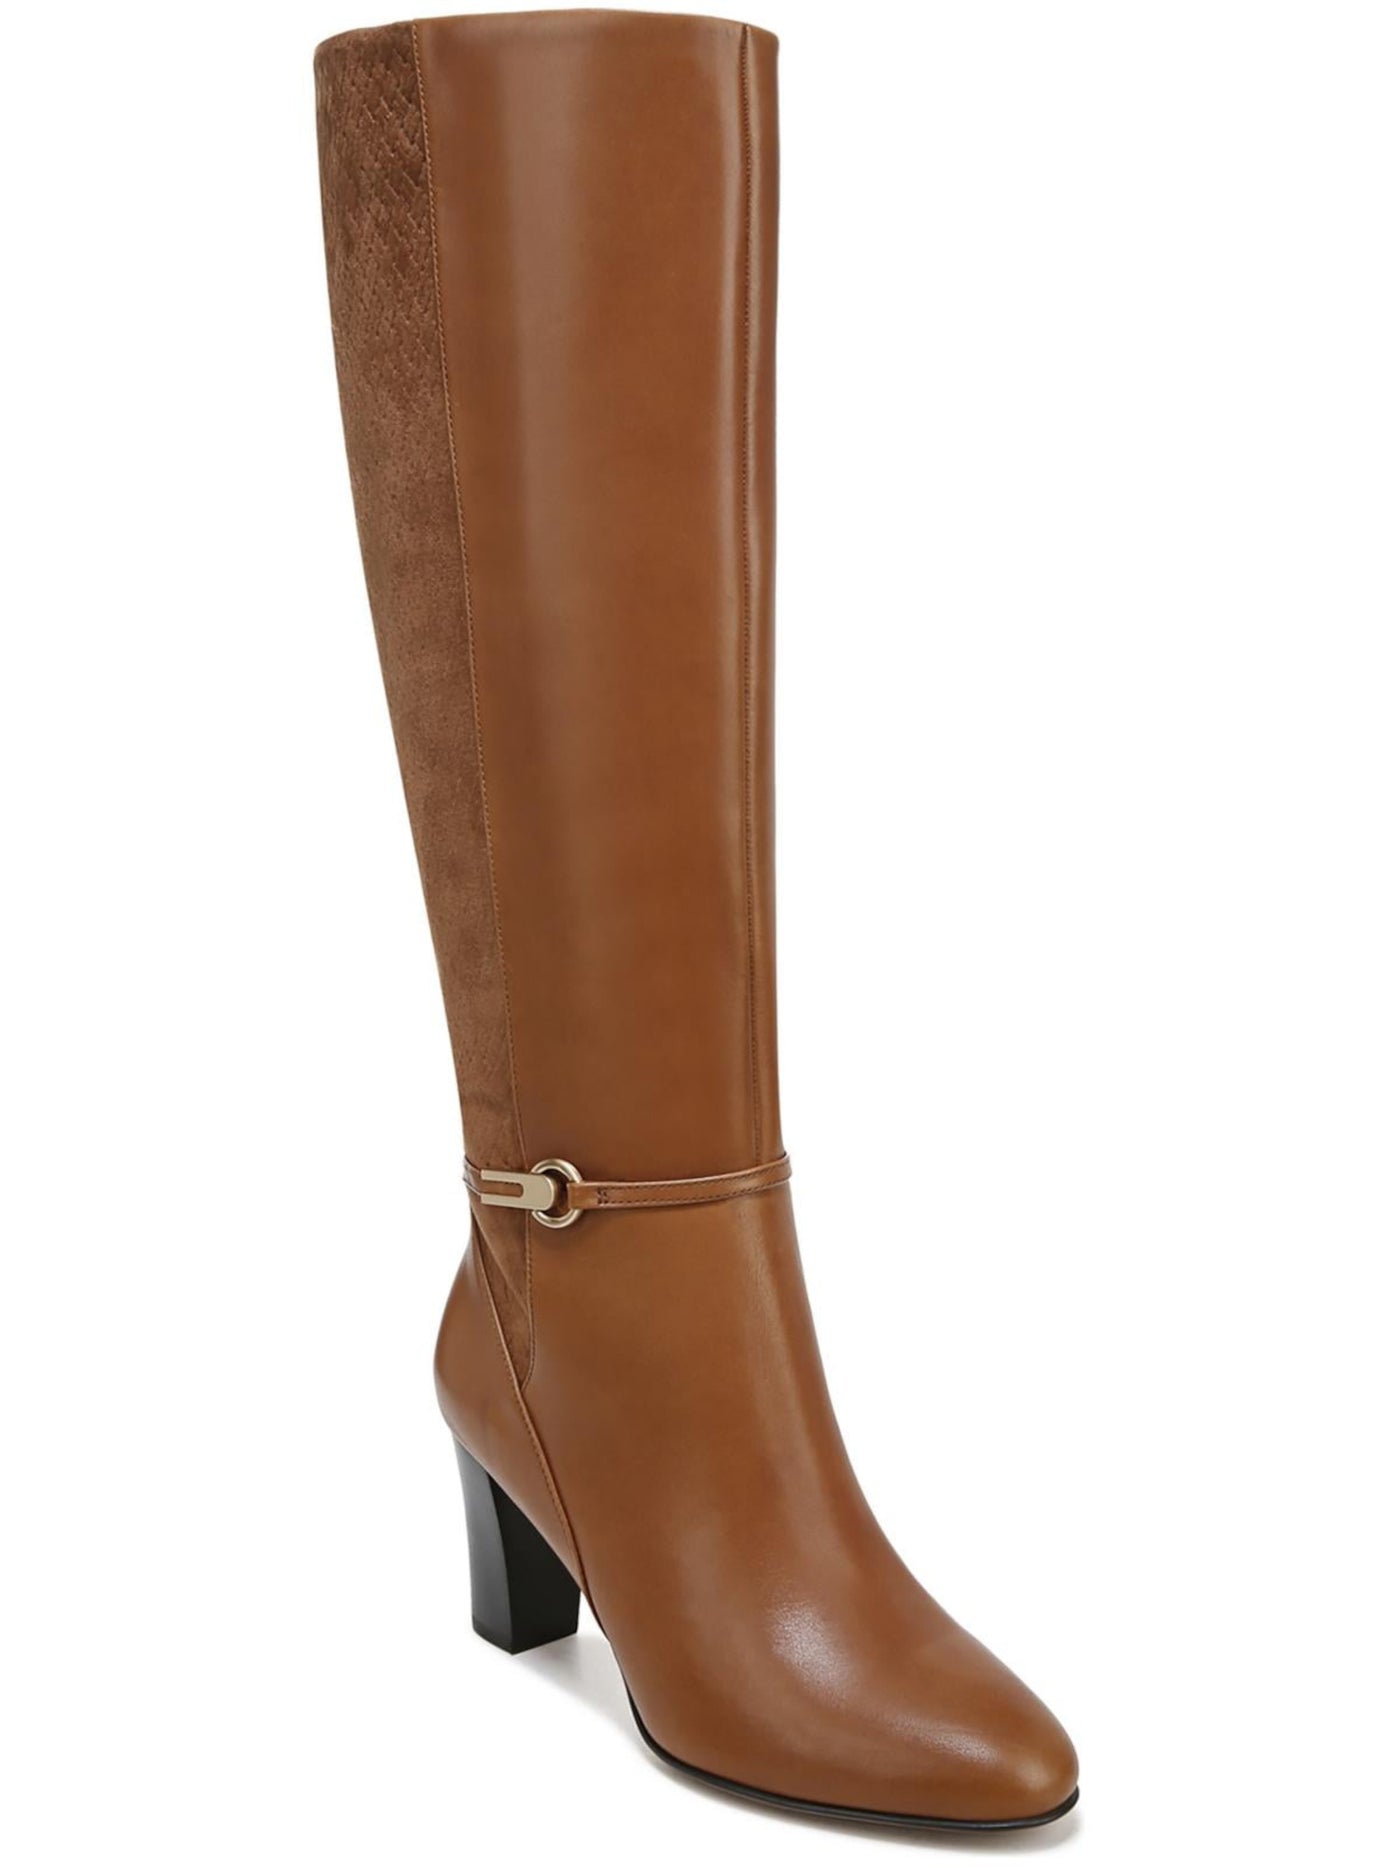 FRANCO SARTO Womens Brown Comfort Palermo Almond Toe Block Heel Zip-Up Leather Dress Boots 7.5 M